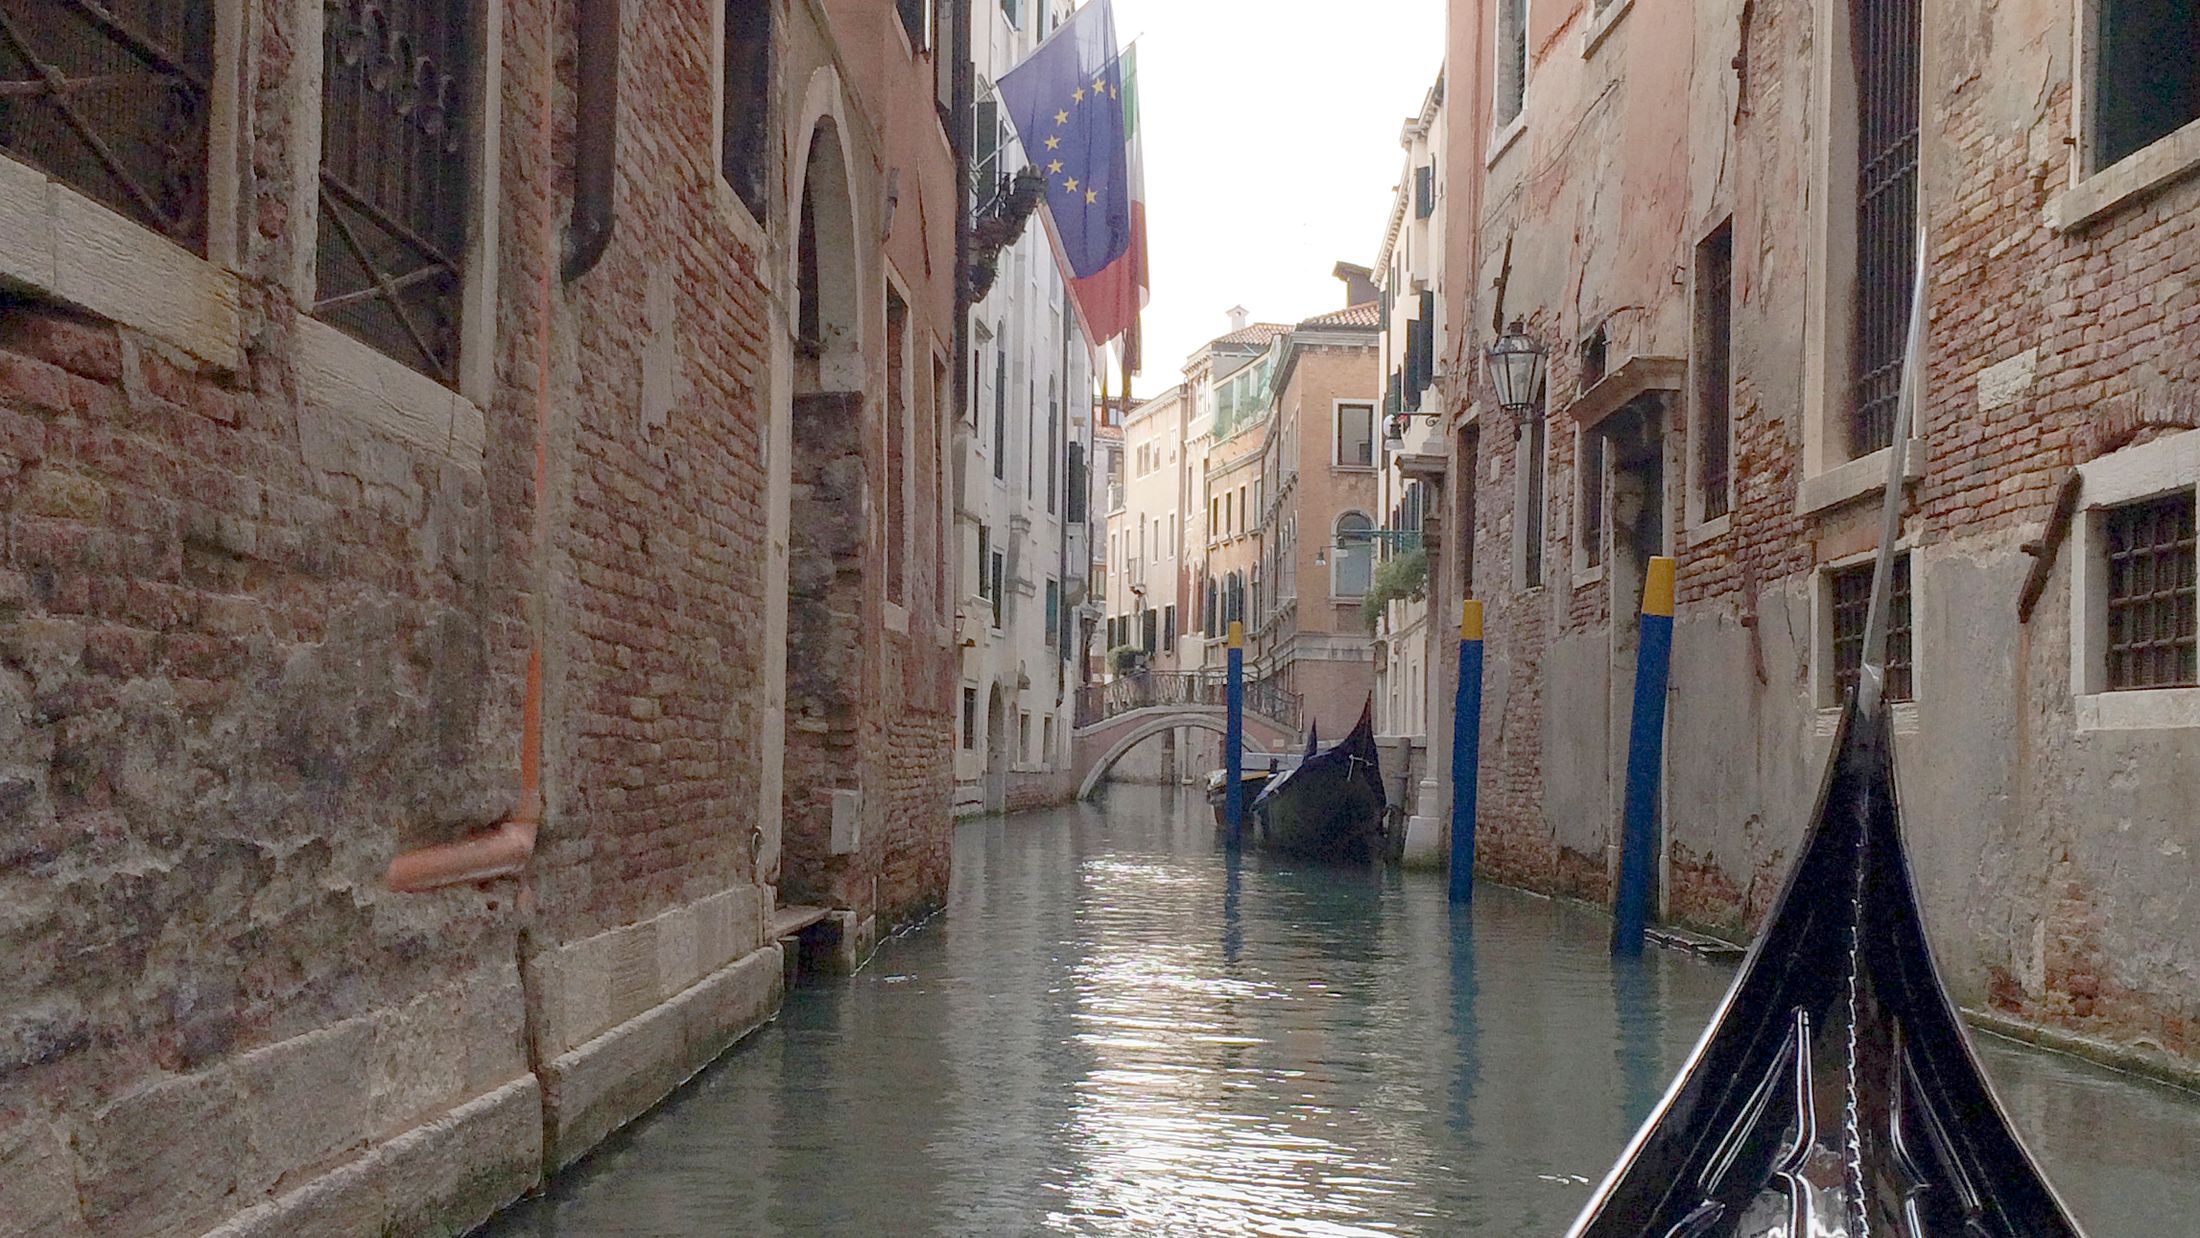 001109_Canal_Venice_Italy_Gemma Brown_001-Hybris